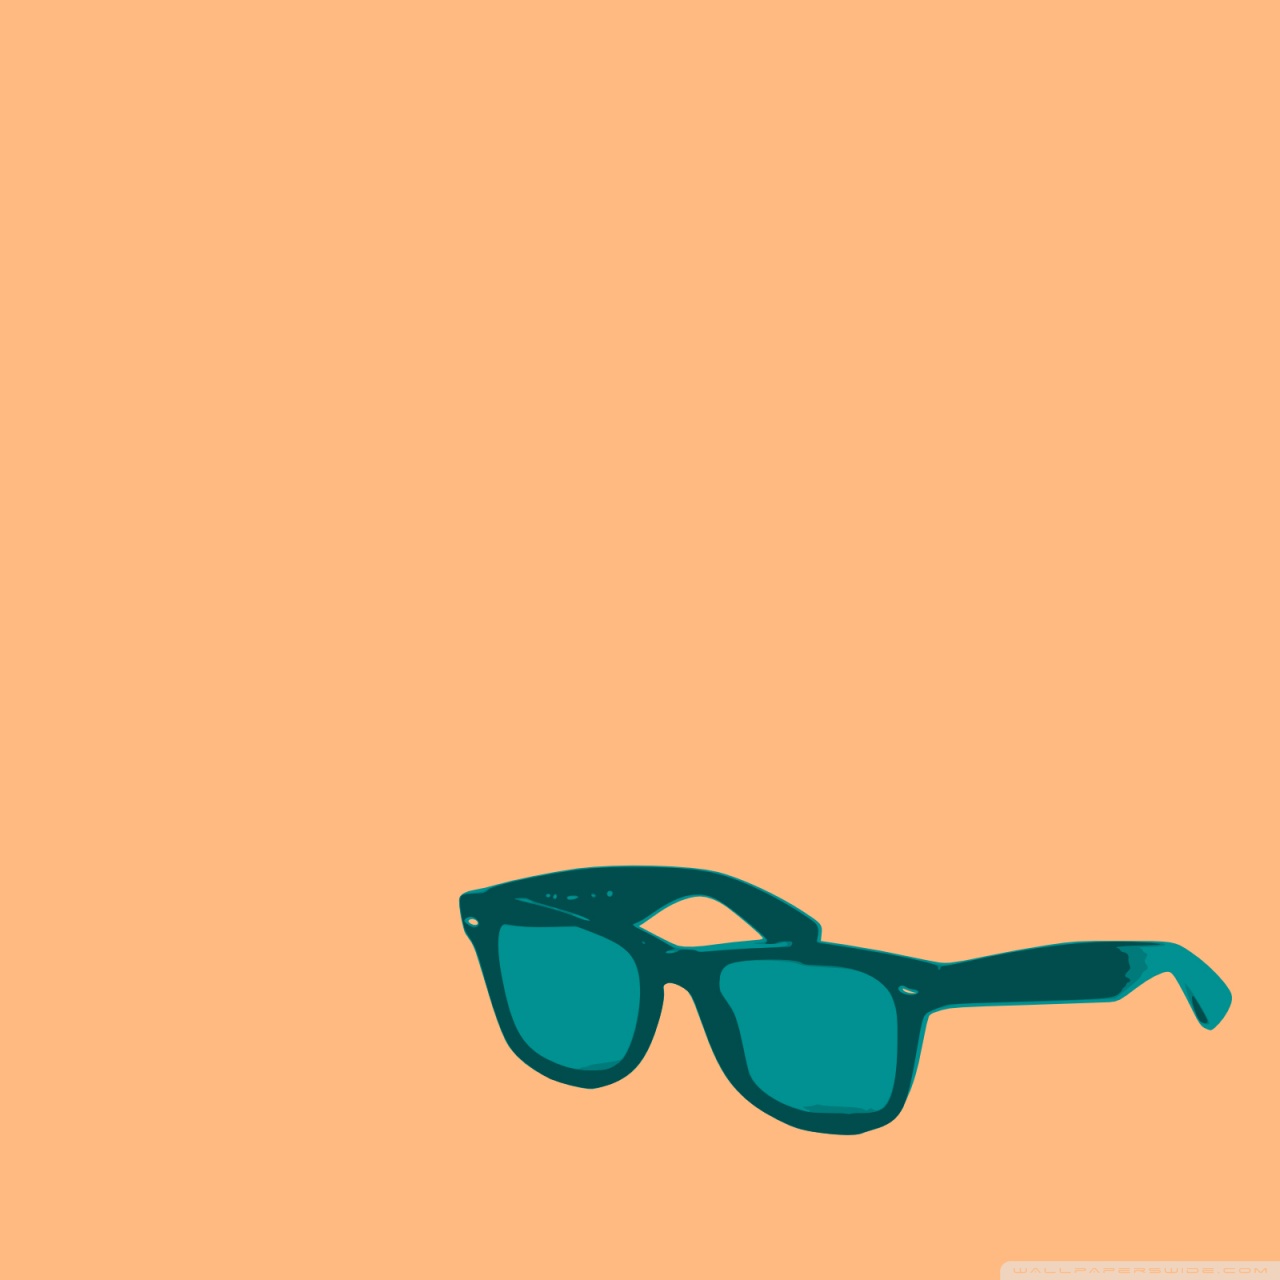 Image of green glasses